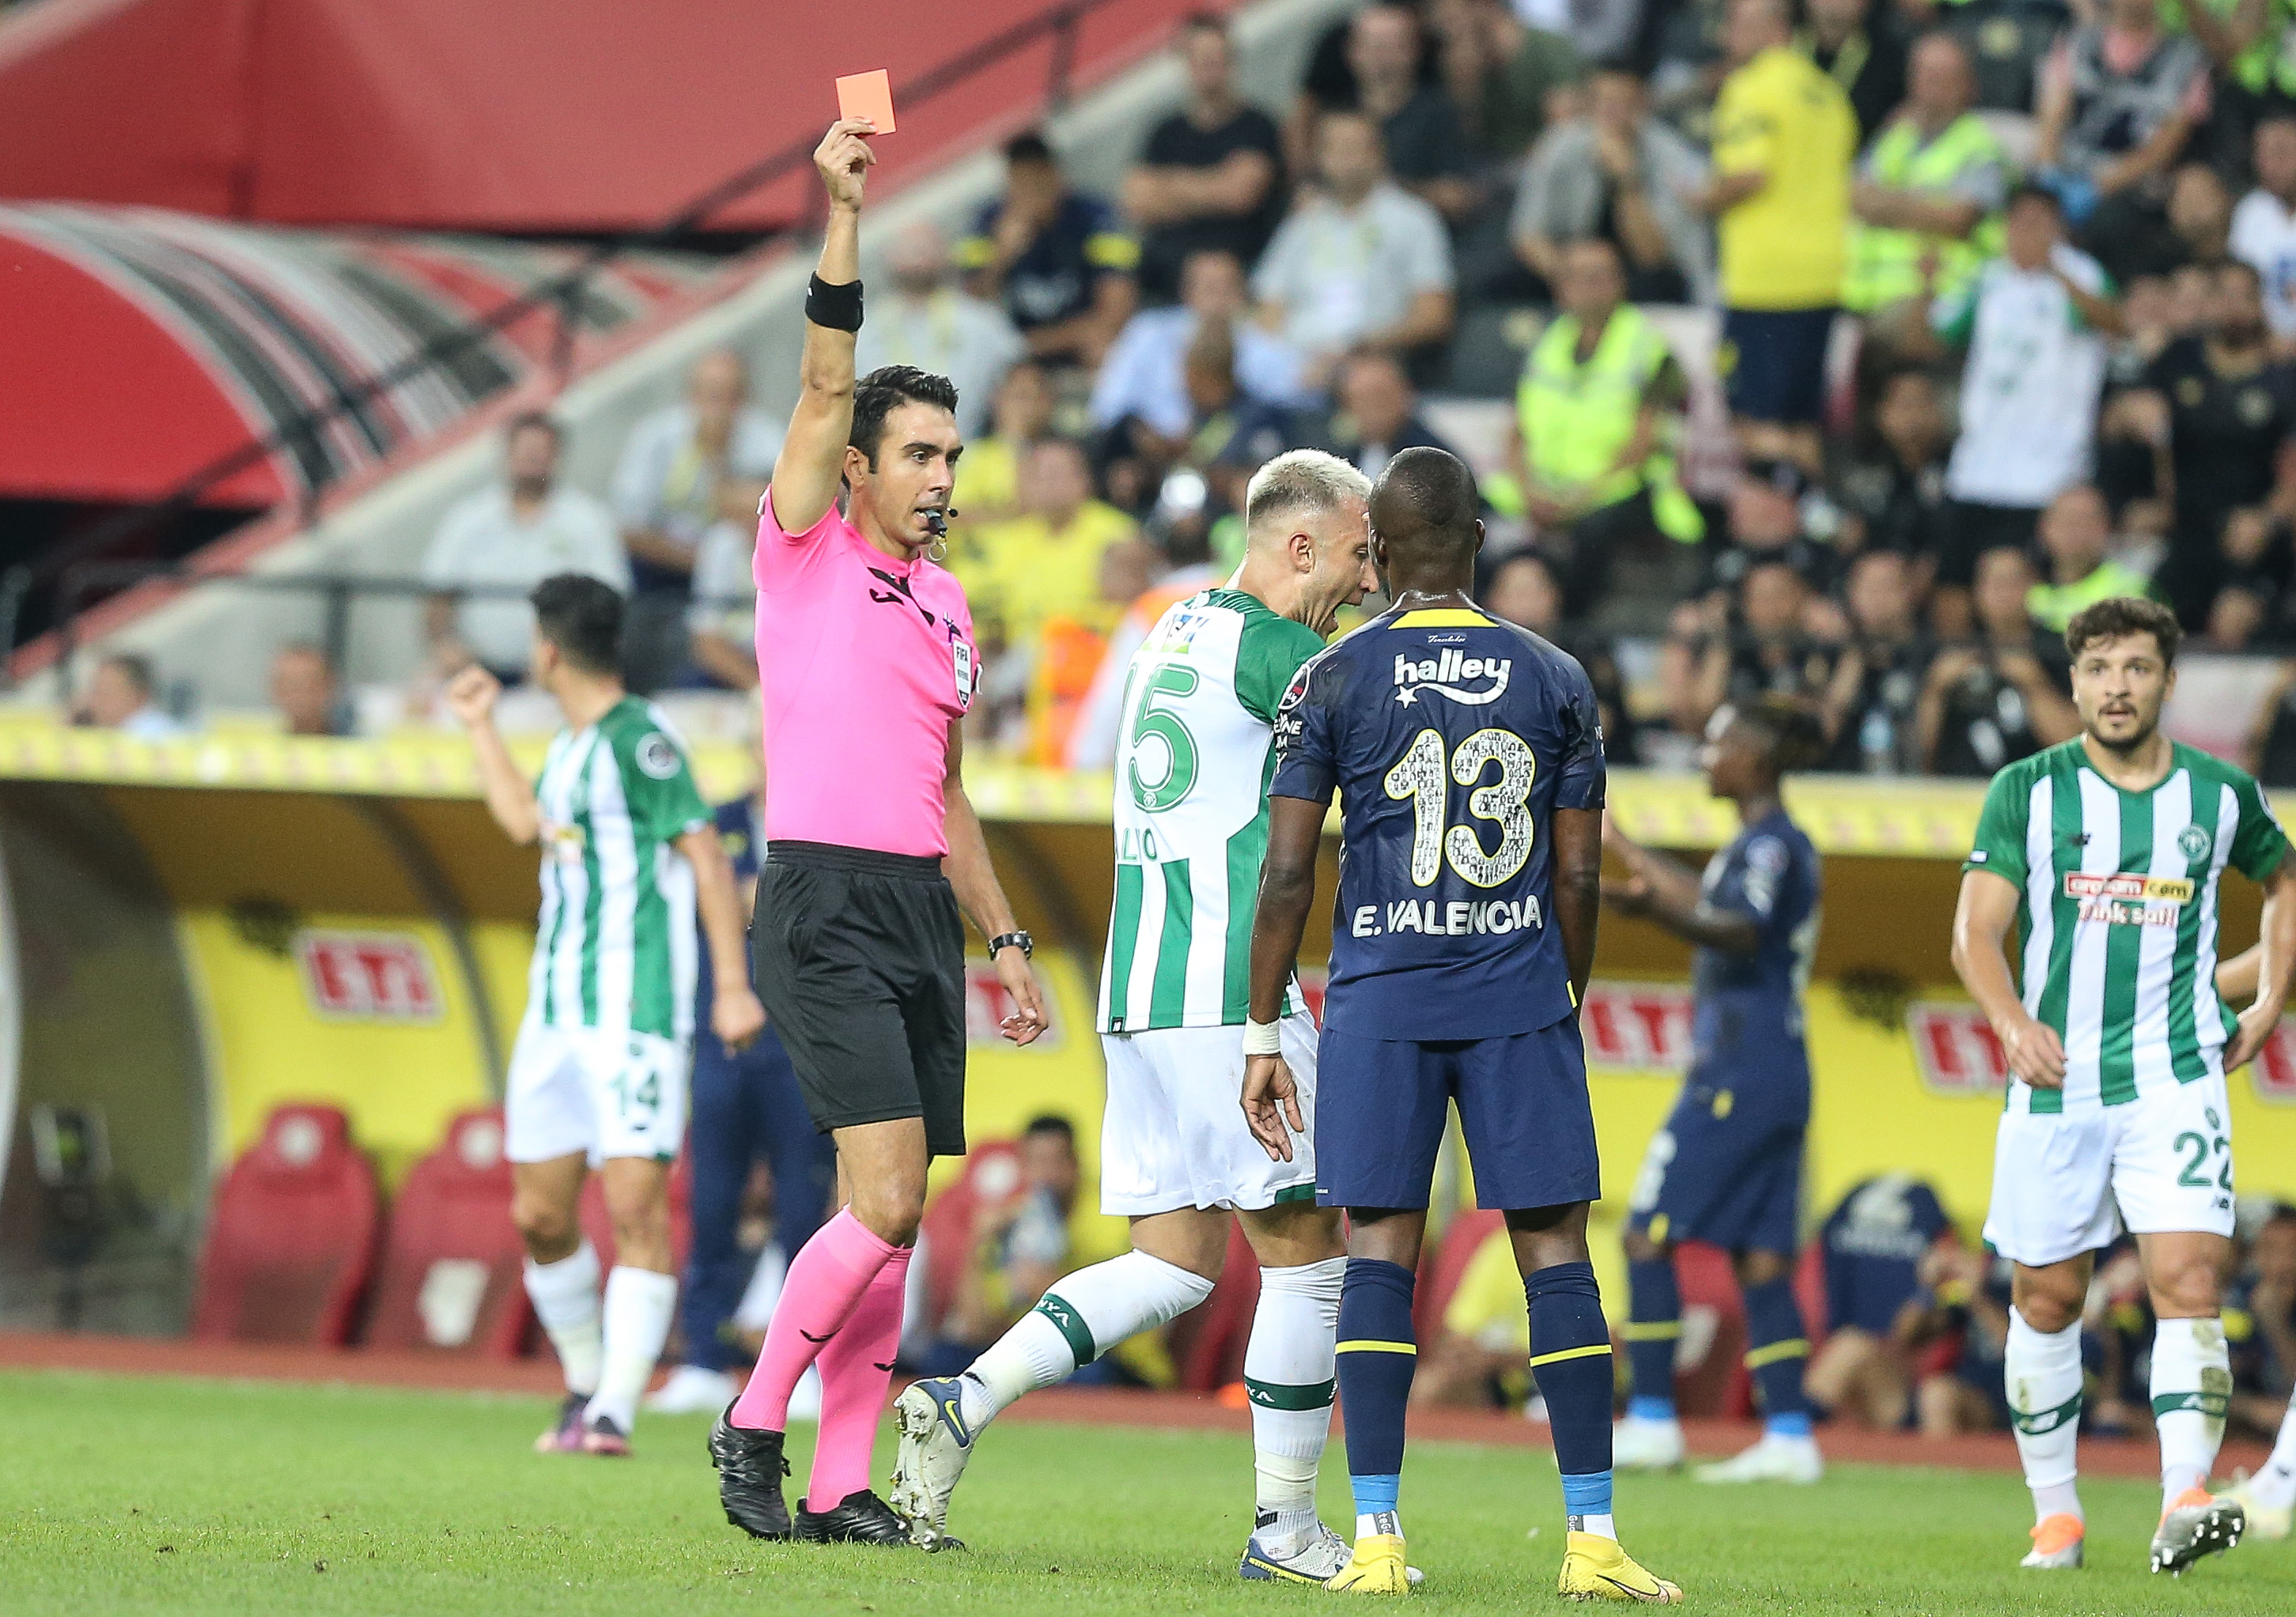 Antalyaspor vs Fenerbahçe: A Rivalry on the Turkish Football Stage